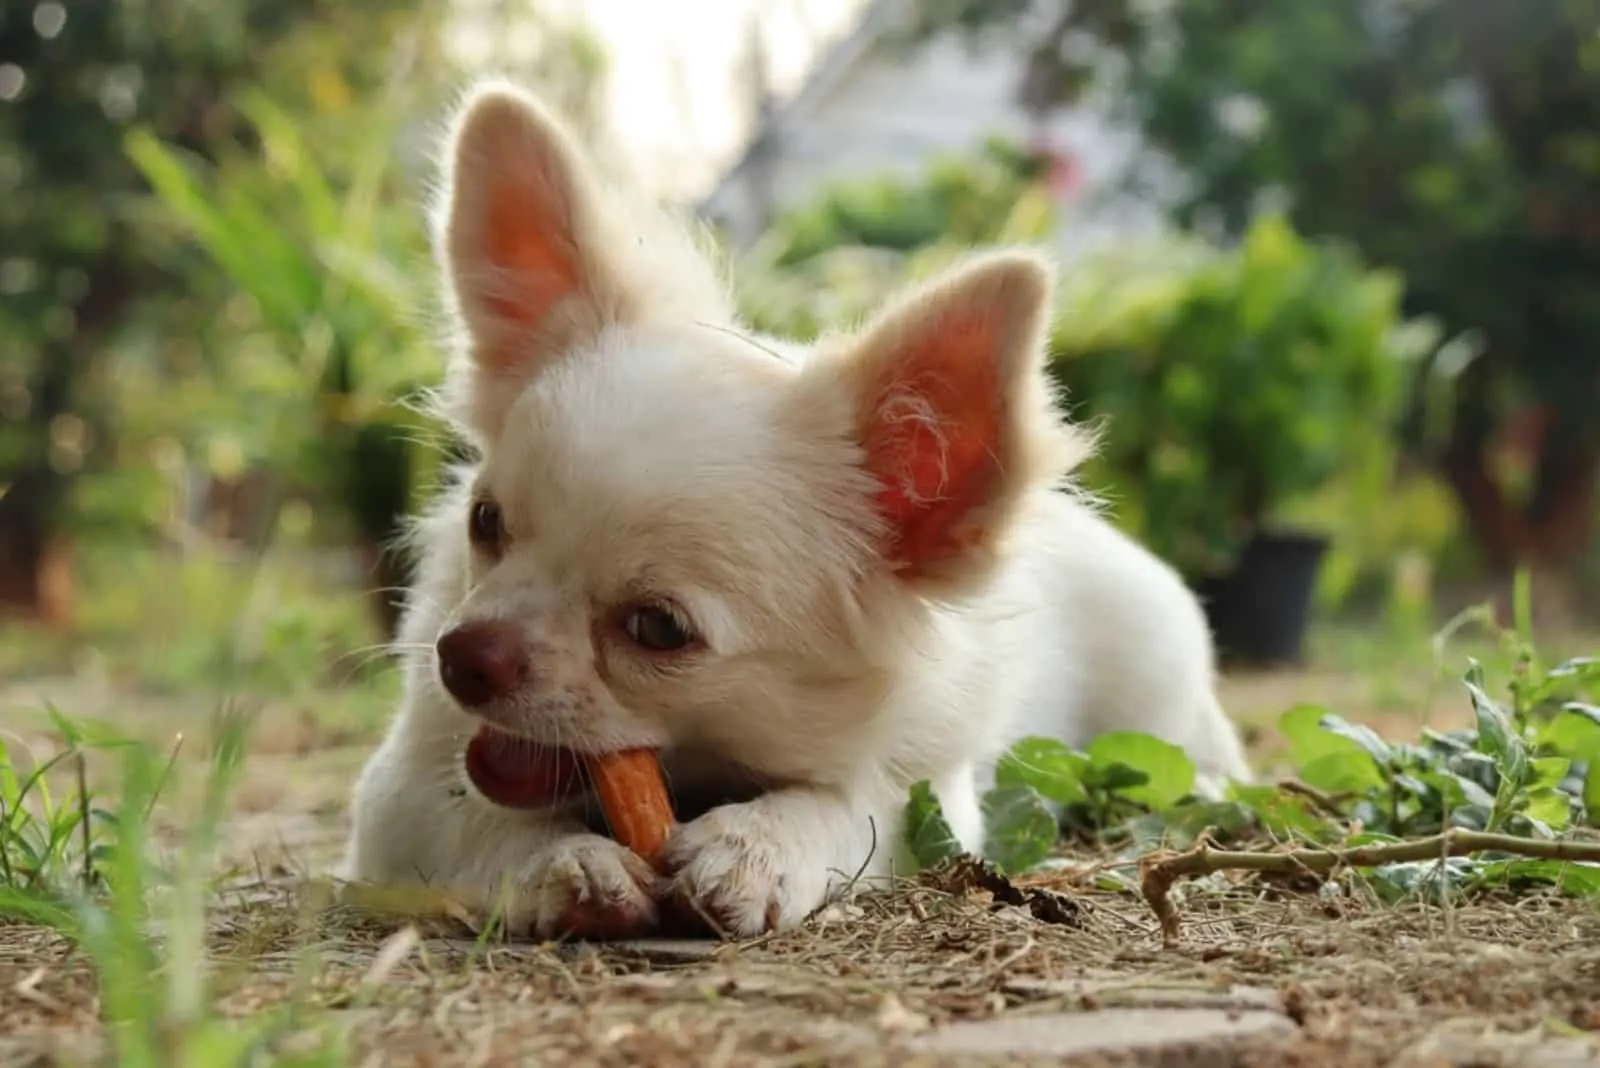 Cute of chihuahua dog eating dried food